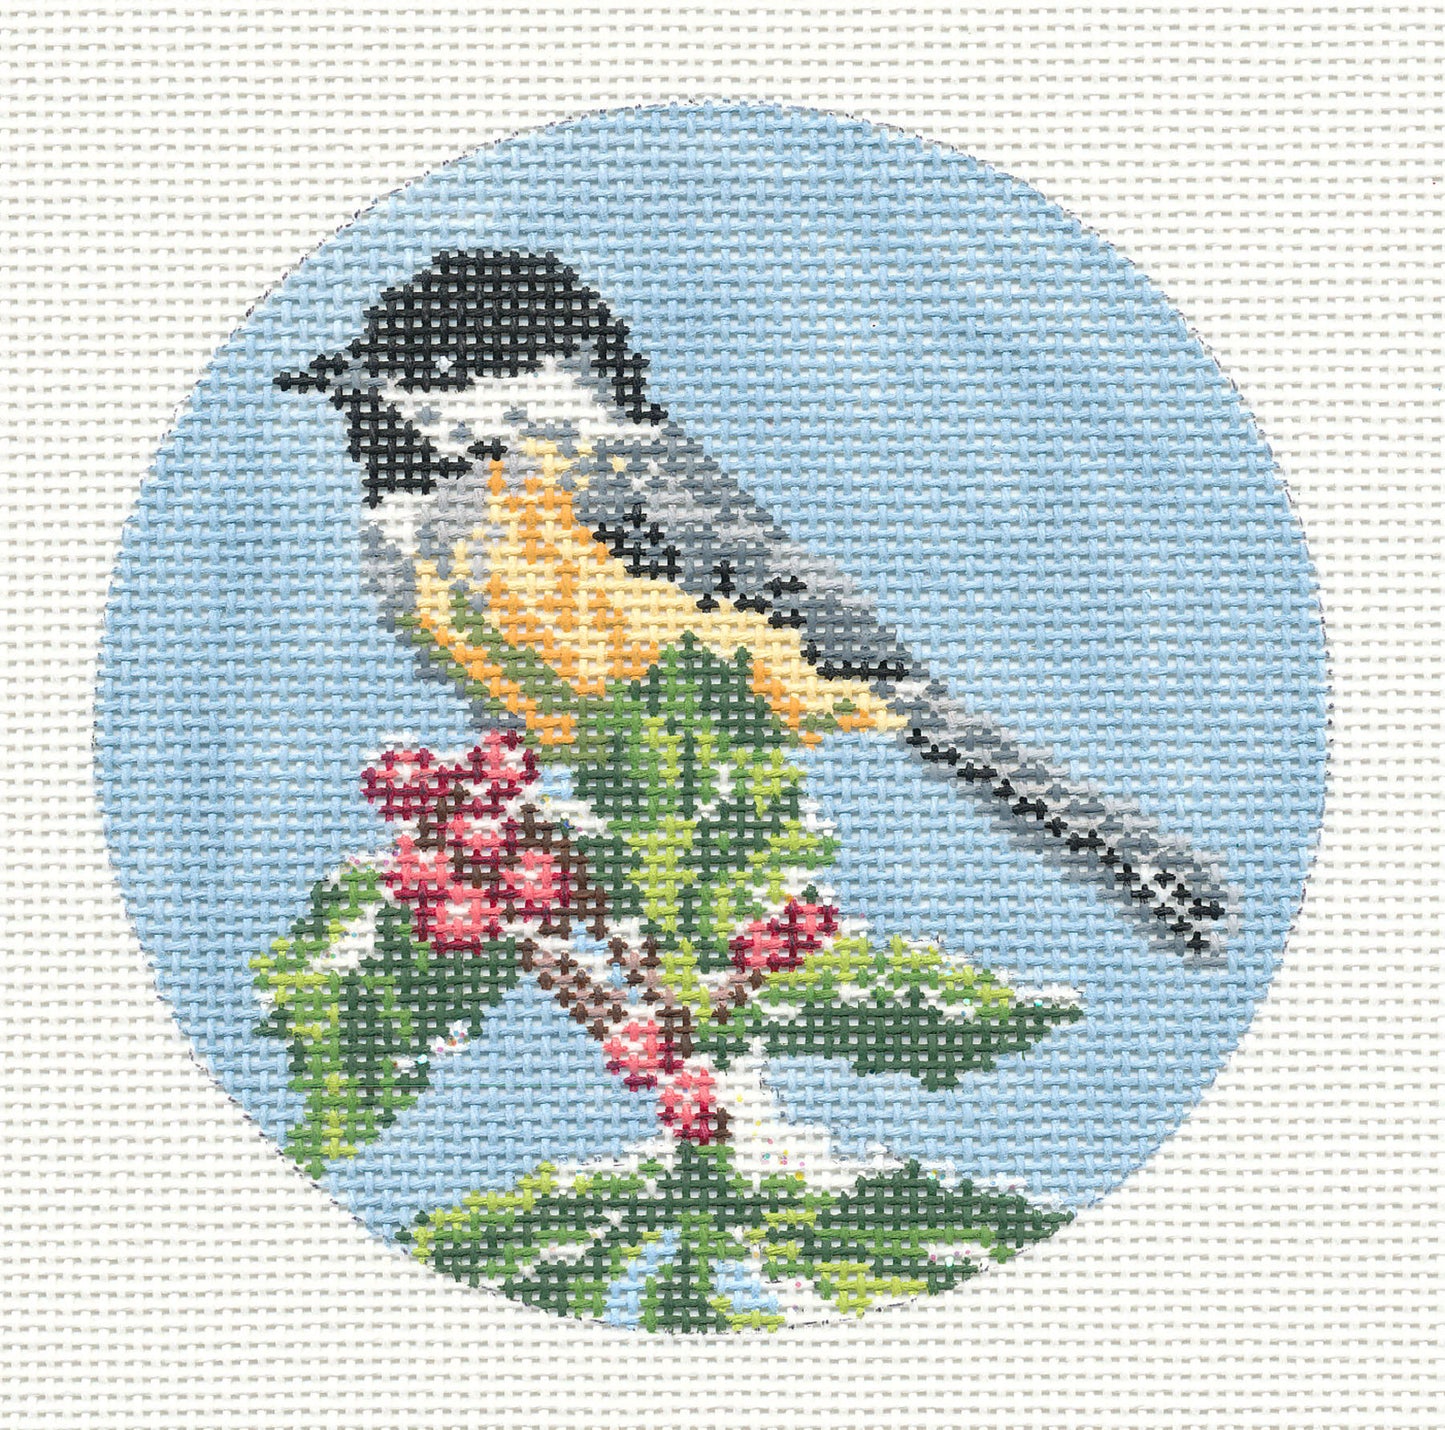 Bird Round ~ Chickadee Bird Ornament handpainted 4" Needlepoint Canvas by Needle Crossings